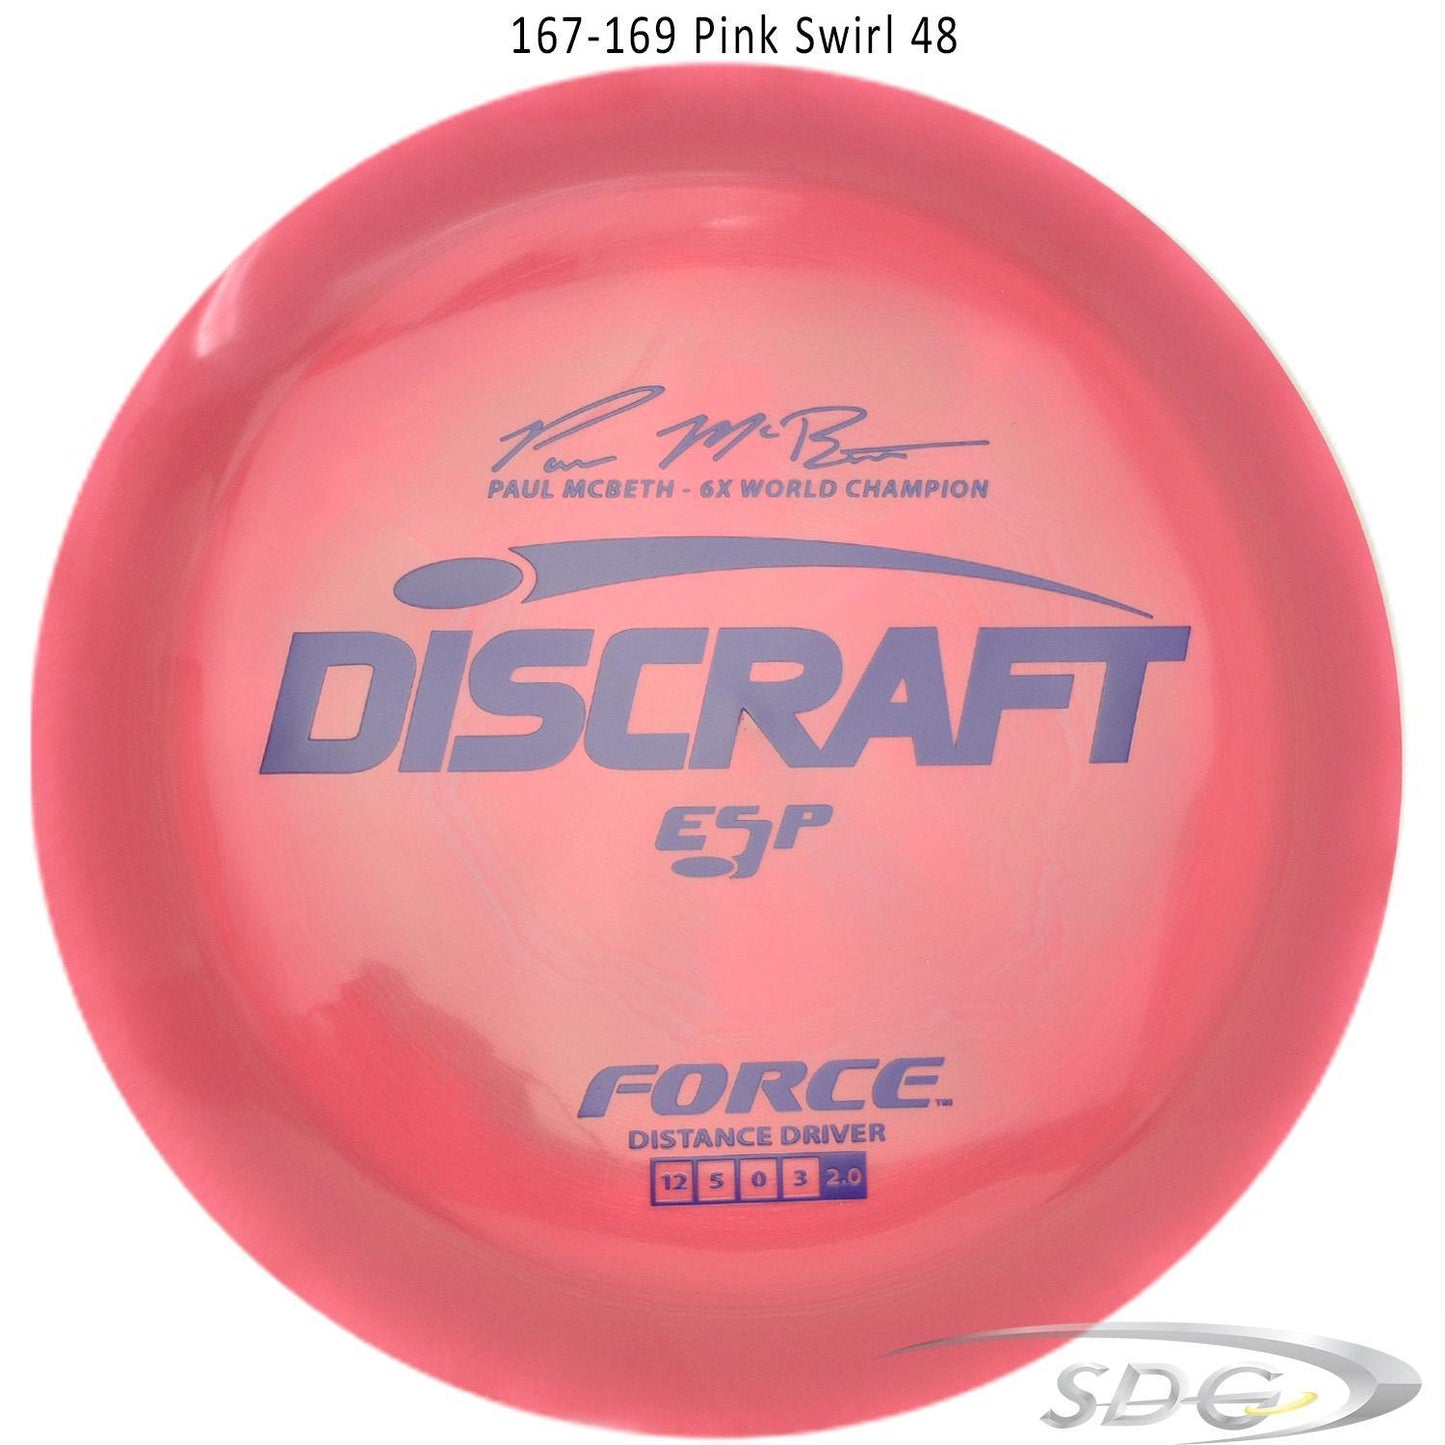 discraft-esp-force-6x-paul-mcbeth-signature-disc-golf-distance-driver-169-160-weights 167-169 Pink Swirl 48 